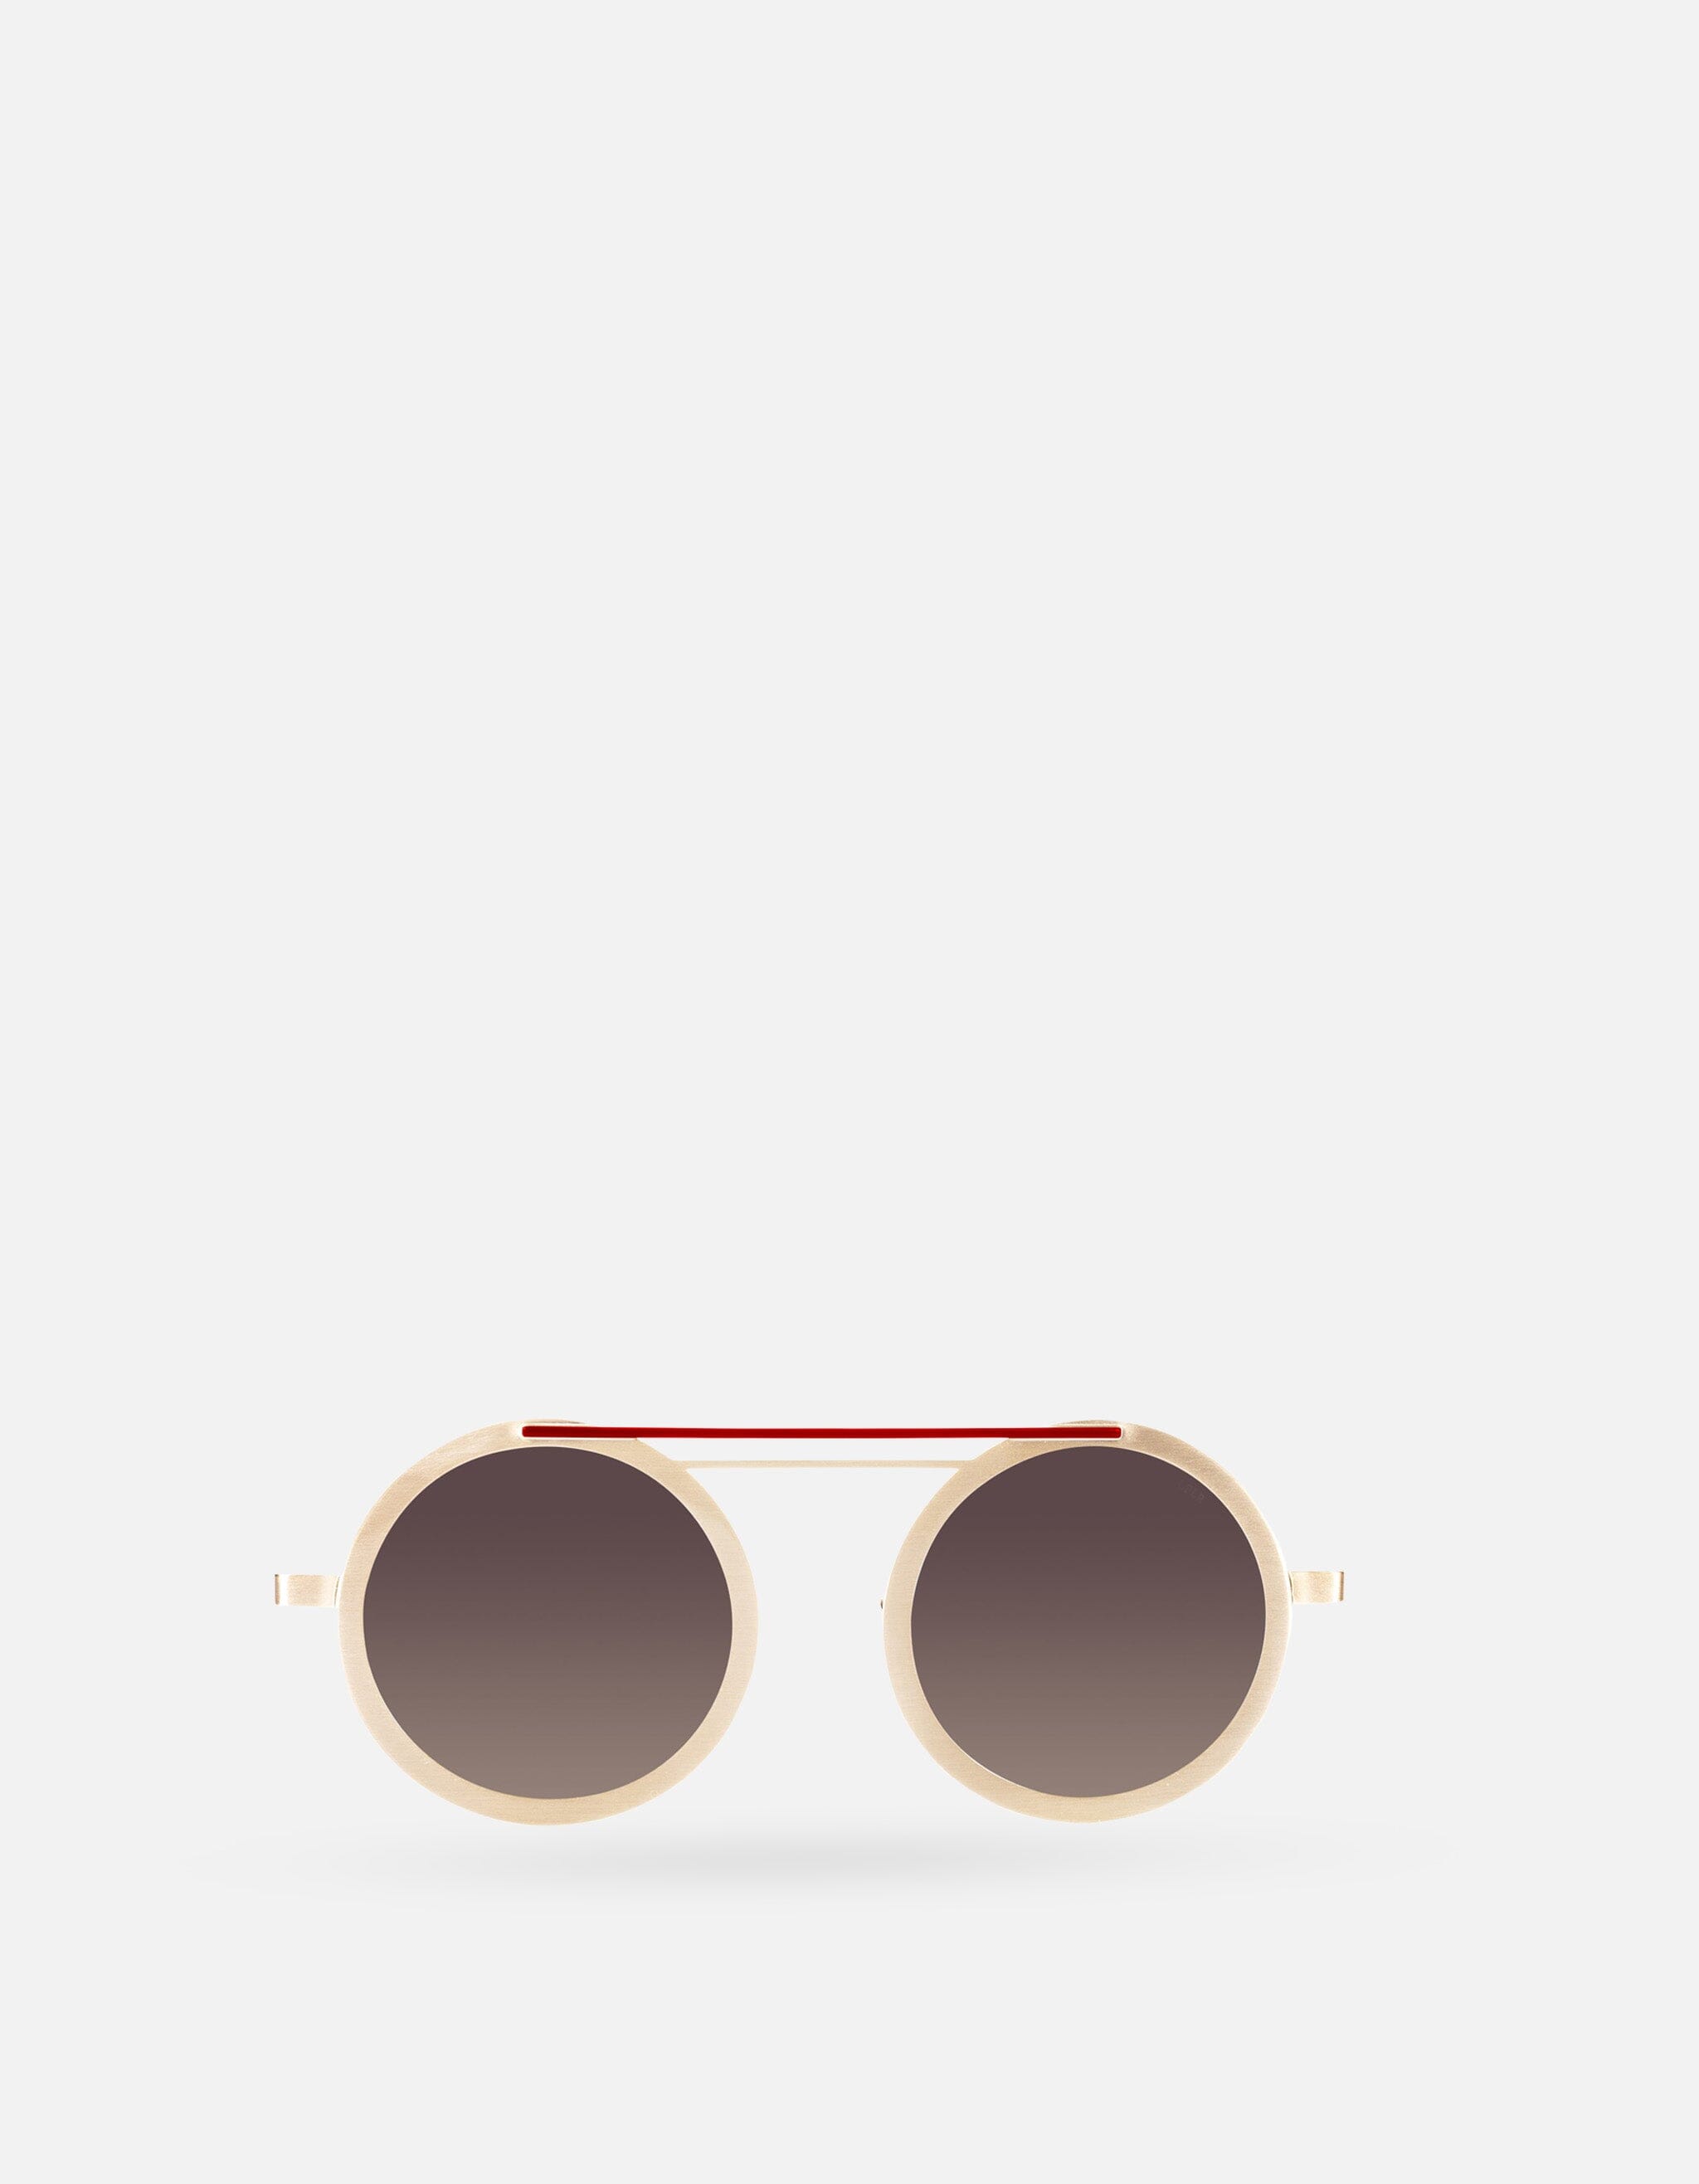 Videnci - Champagne Sunglasses - La petite lunette rouge MACKEENE 